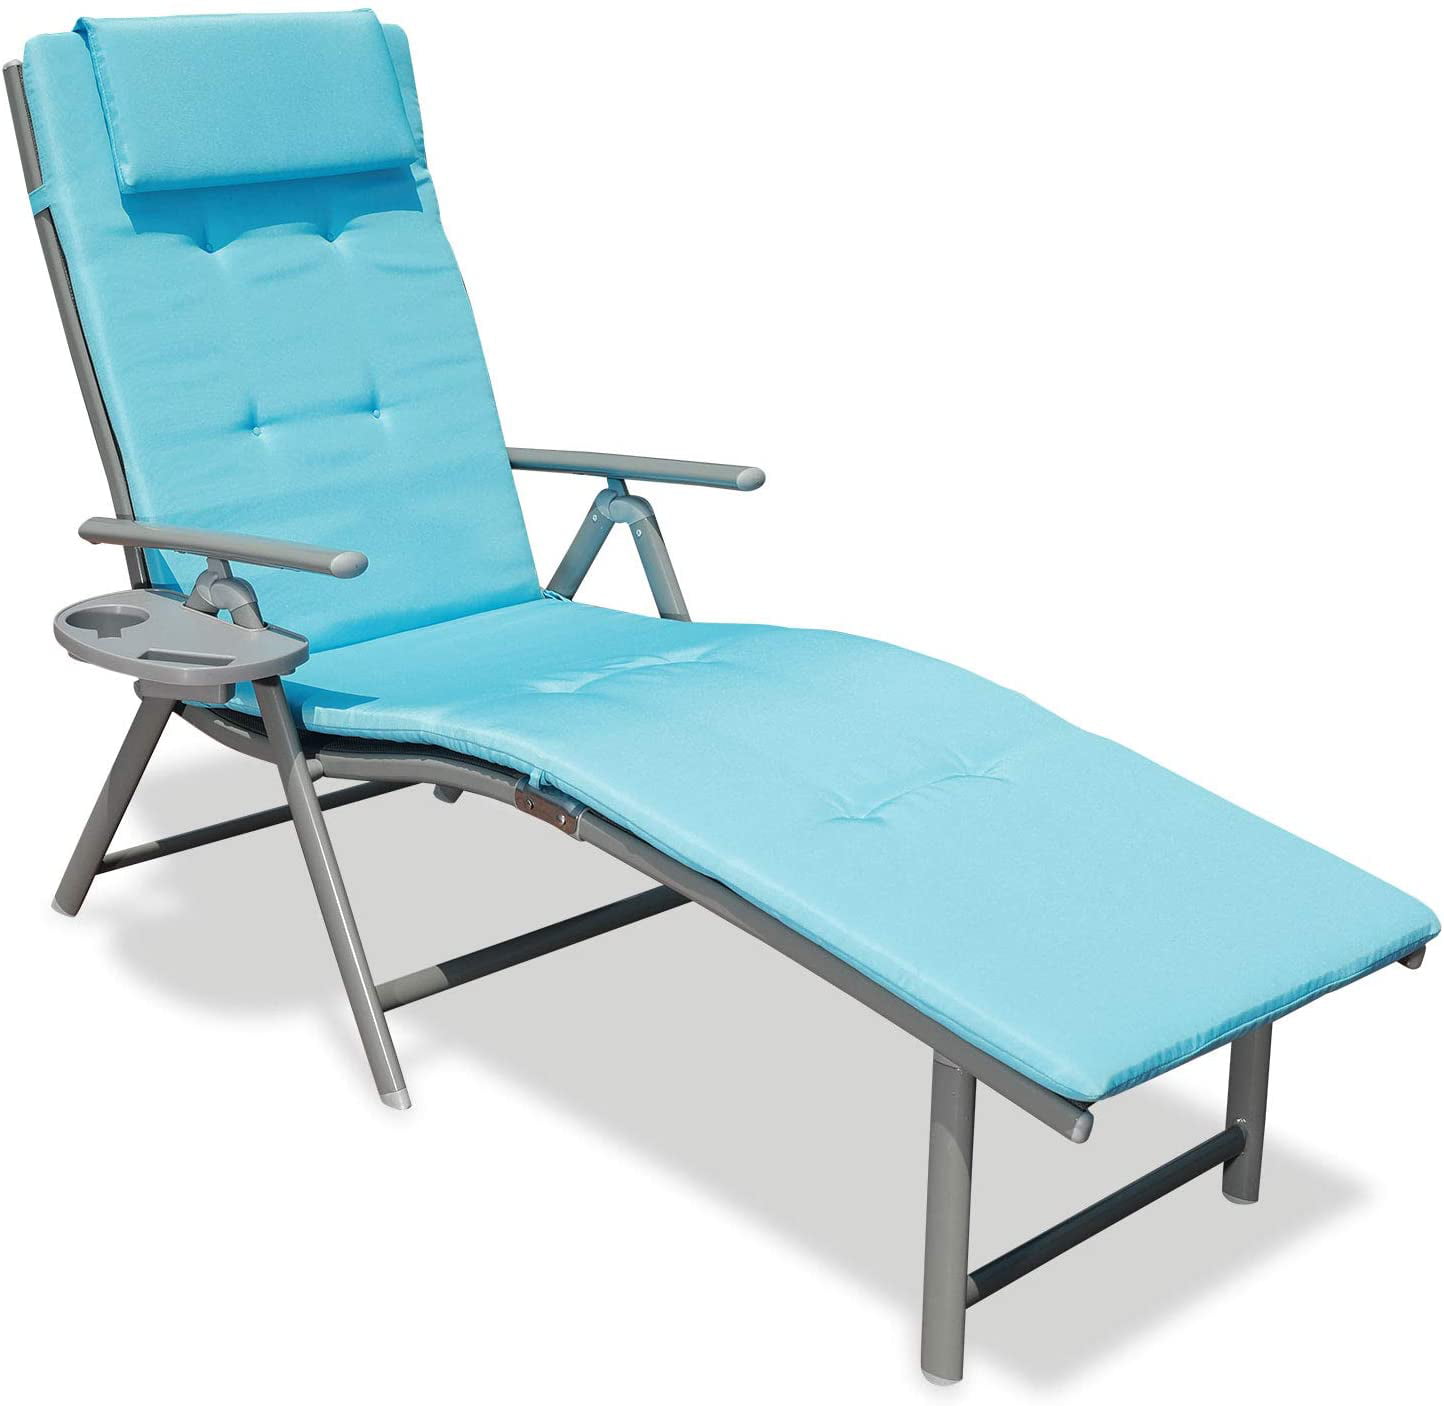 Creatice Folding Lounge Chair Beach for Simple Design